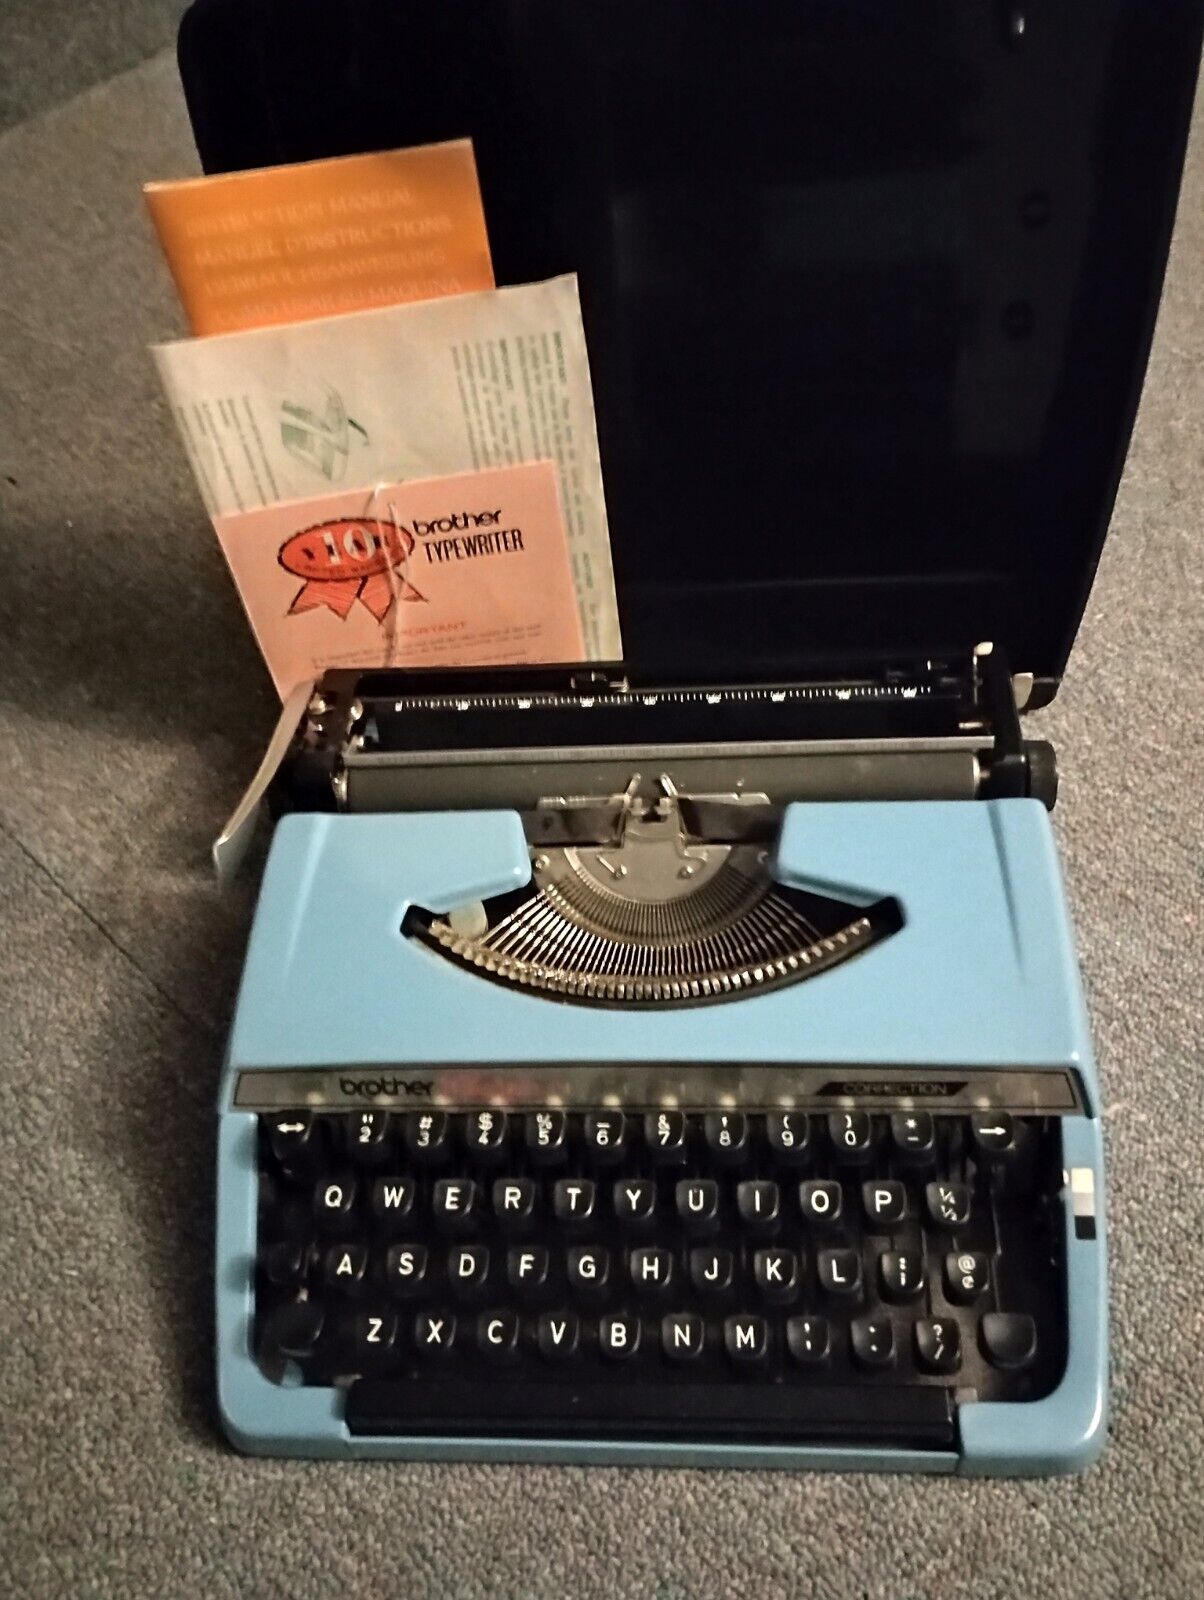 Vintage Brother Charger 11 Blue Portable Typewriter + Case 